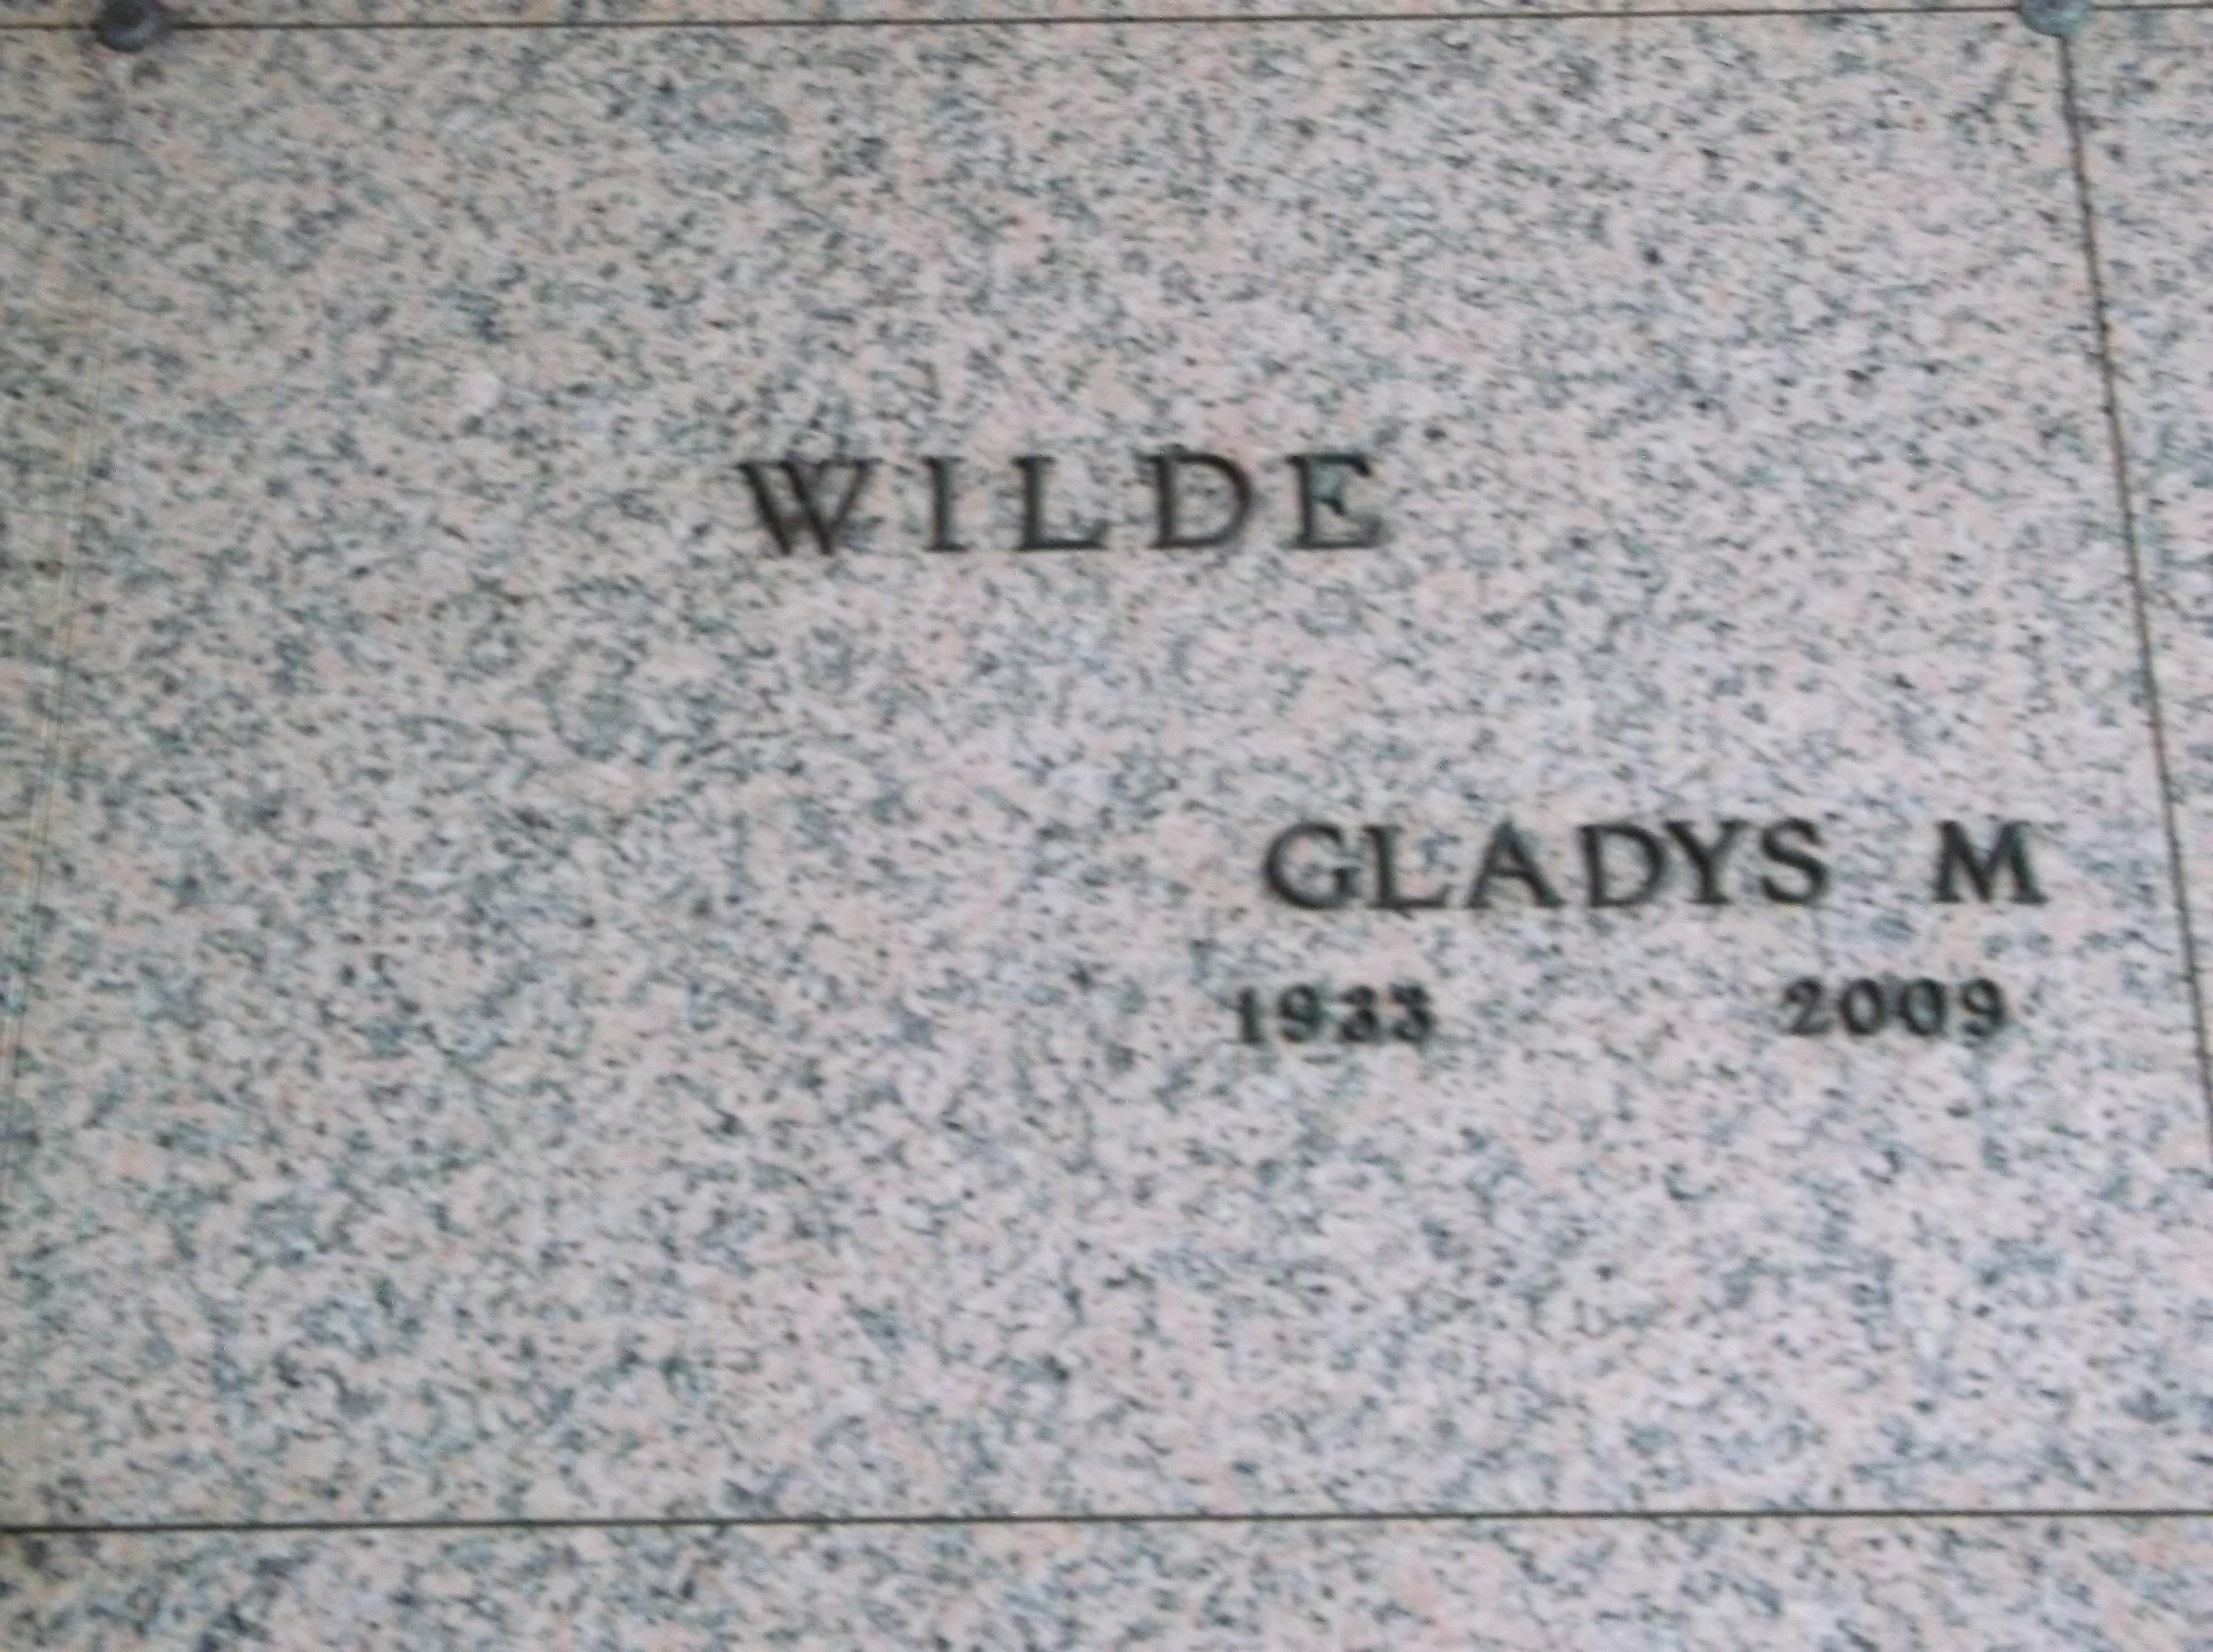 Gladys M Wilde